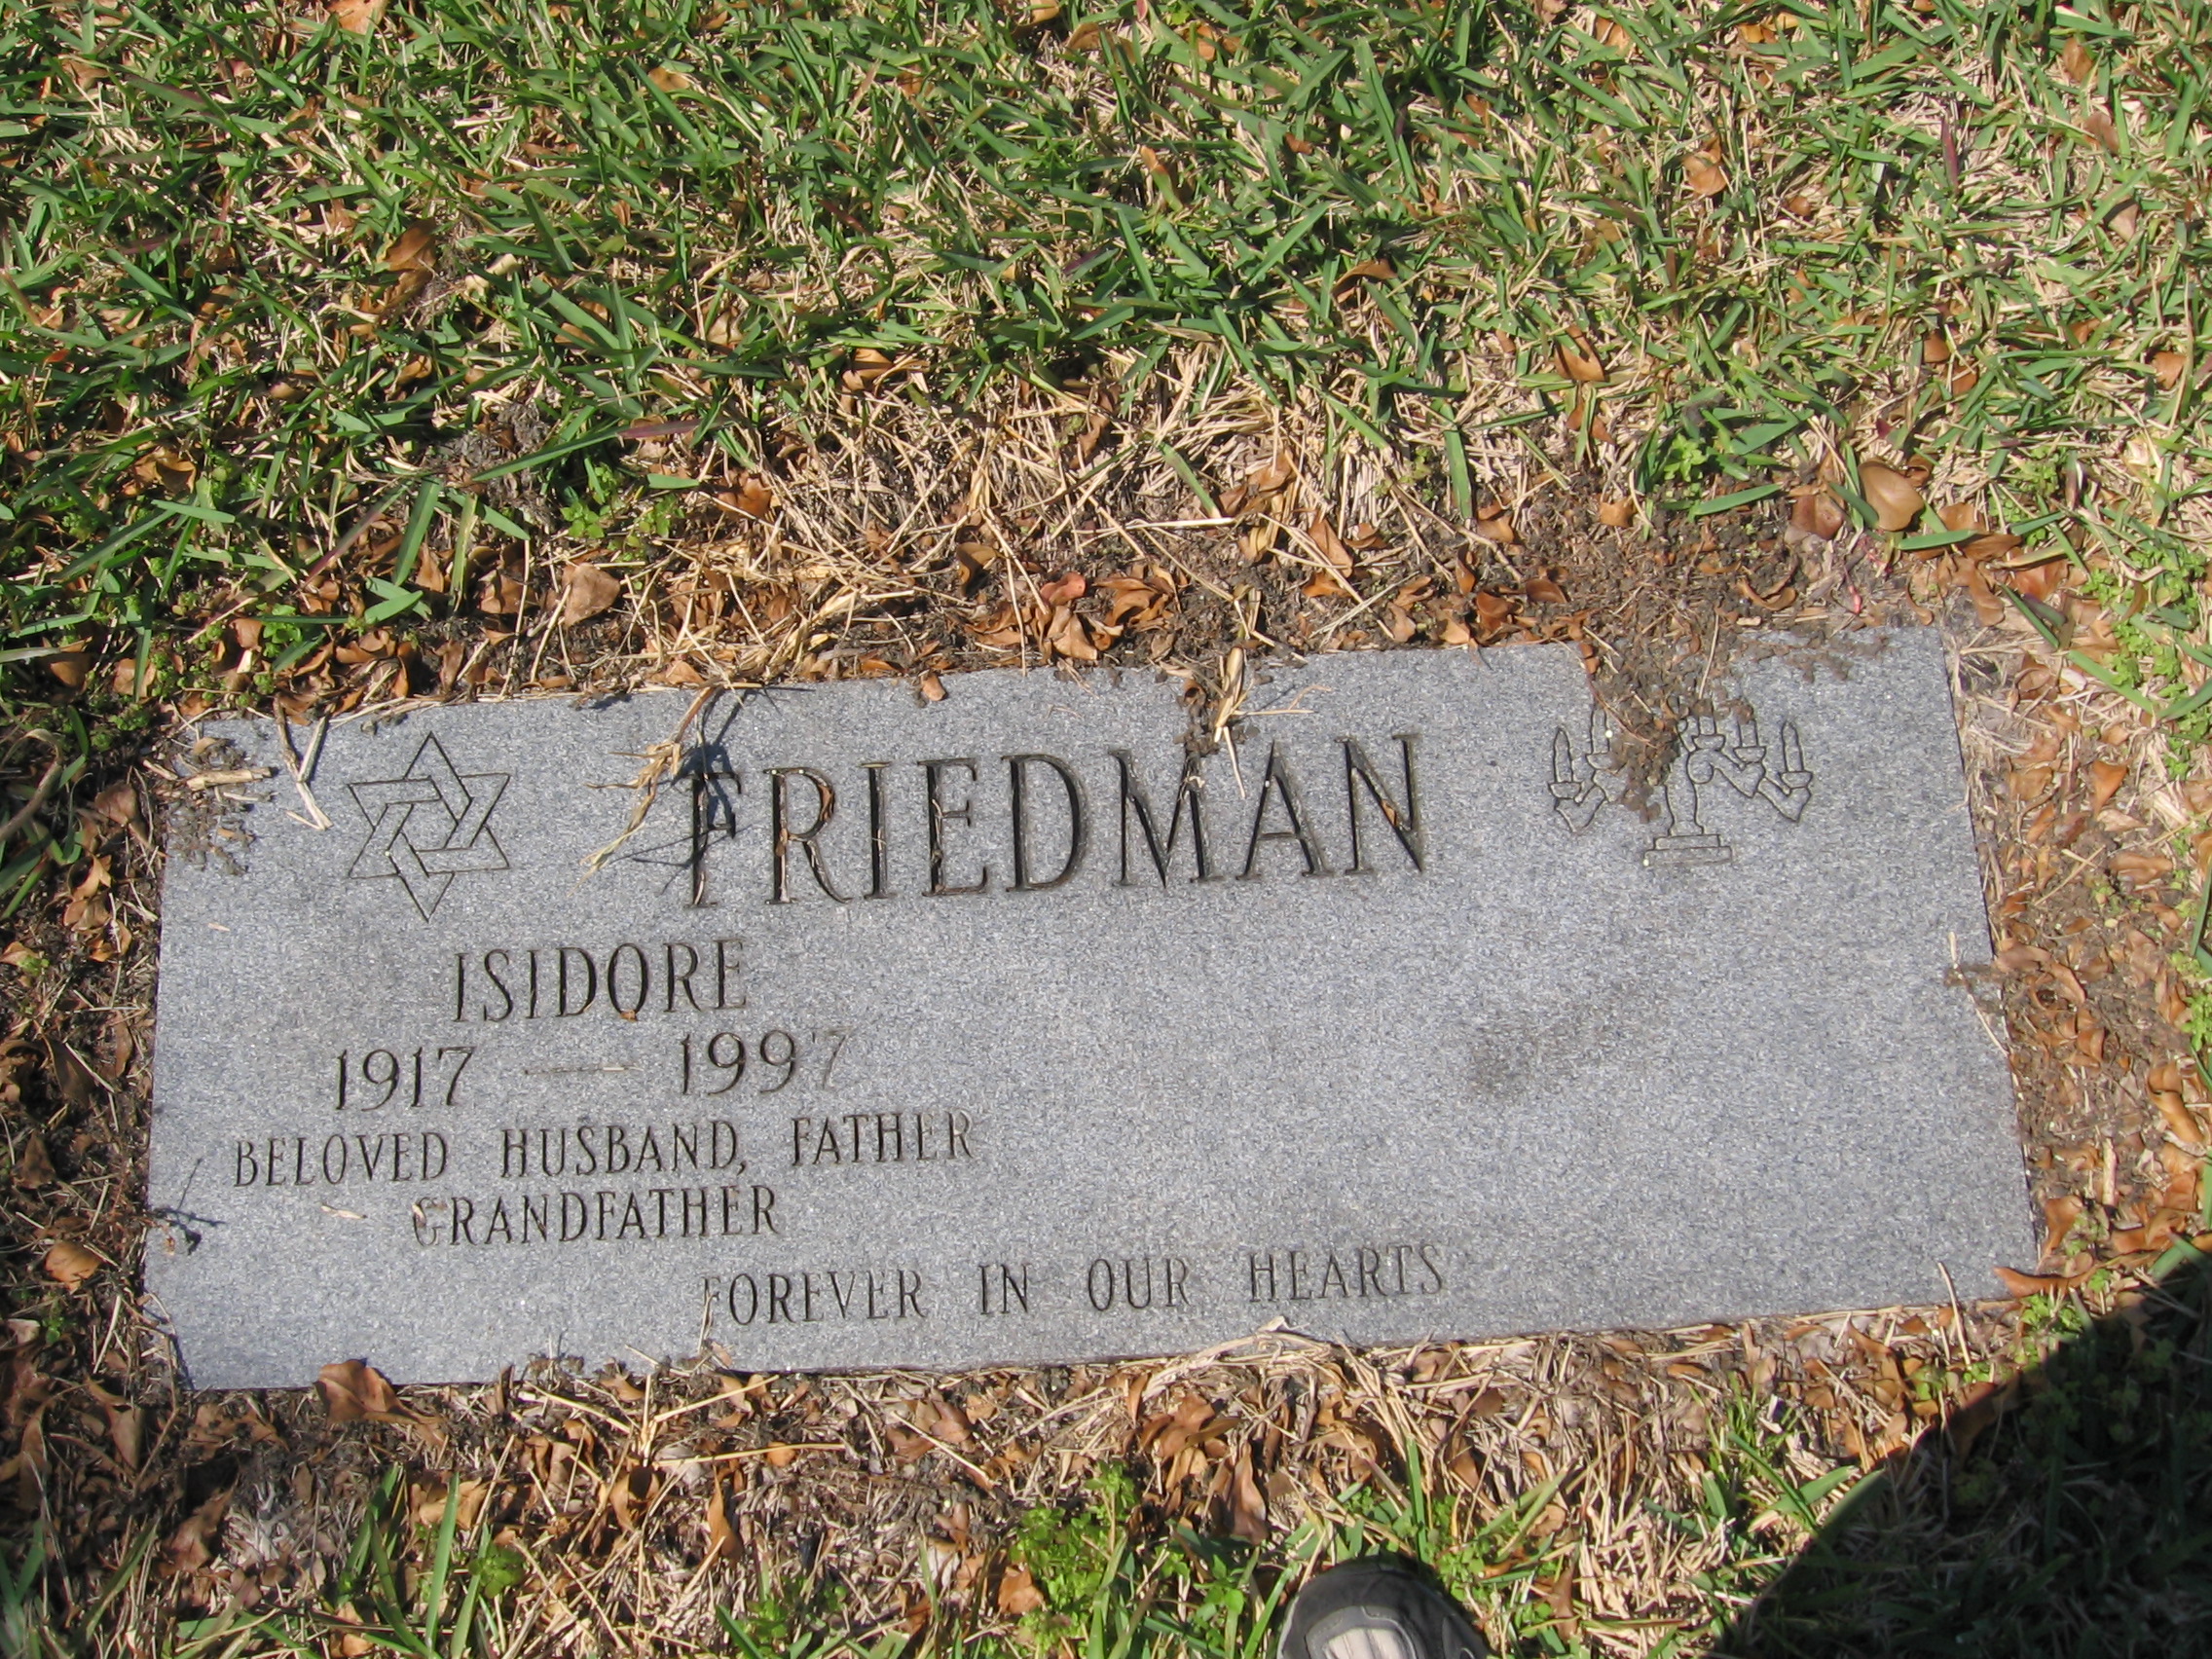 Isidore Friedman